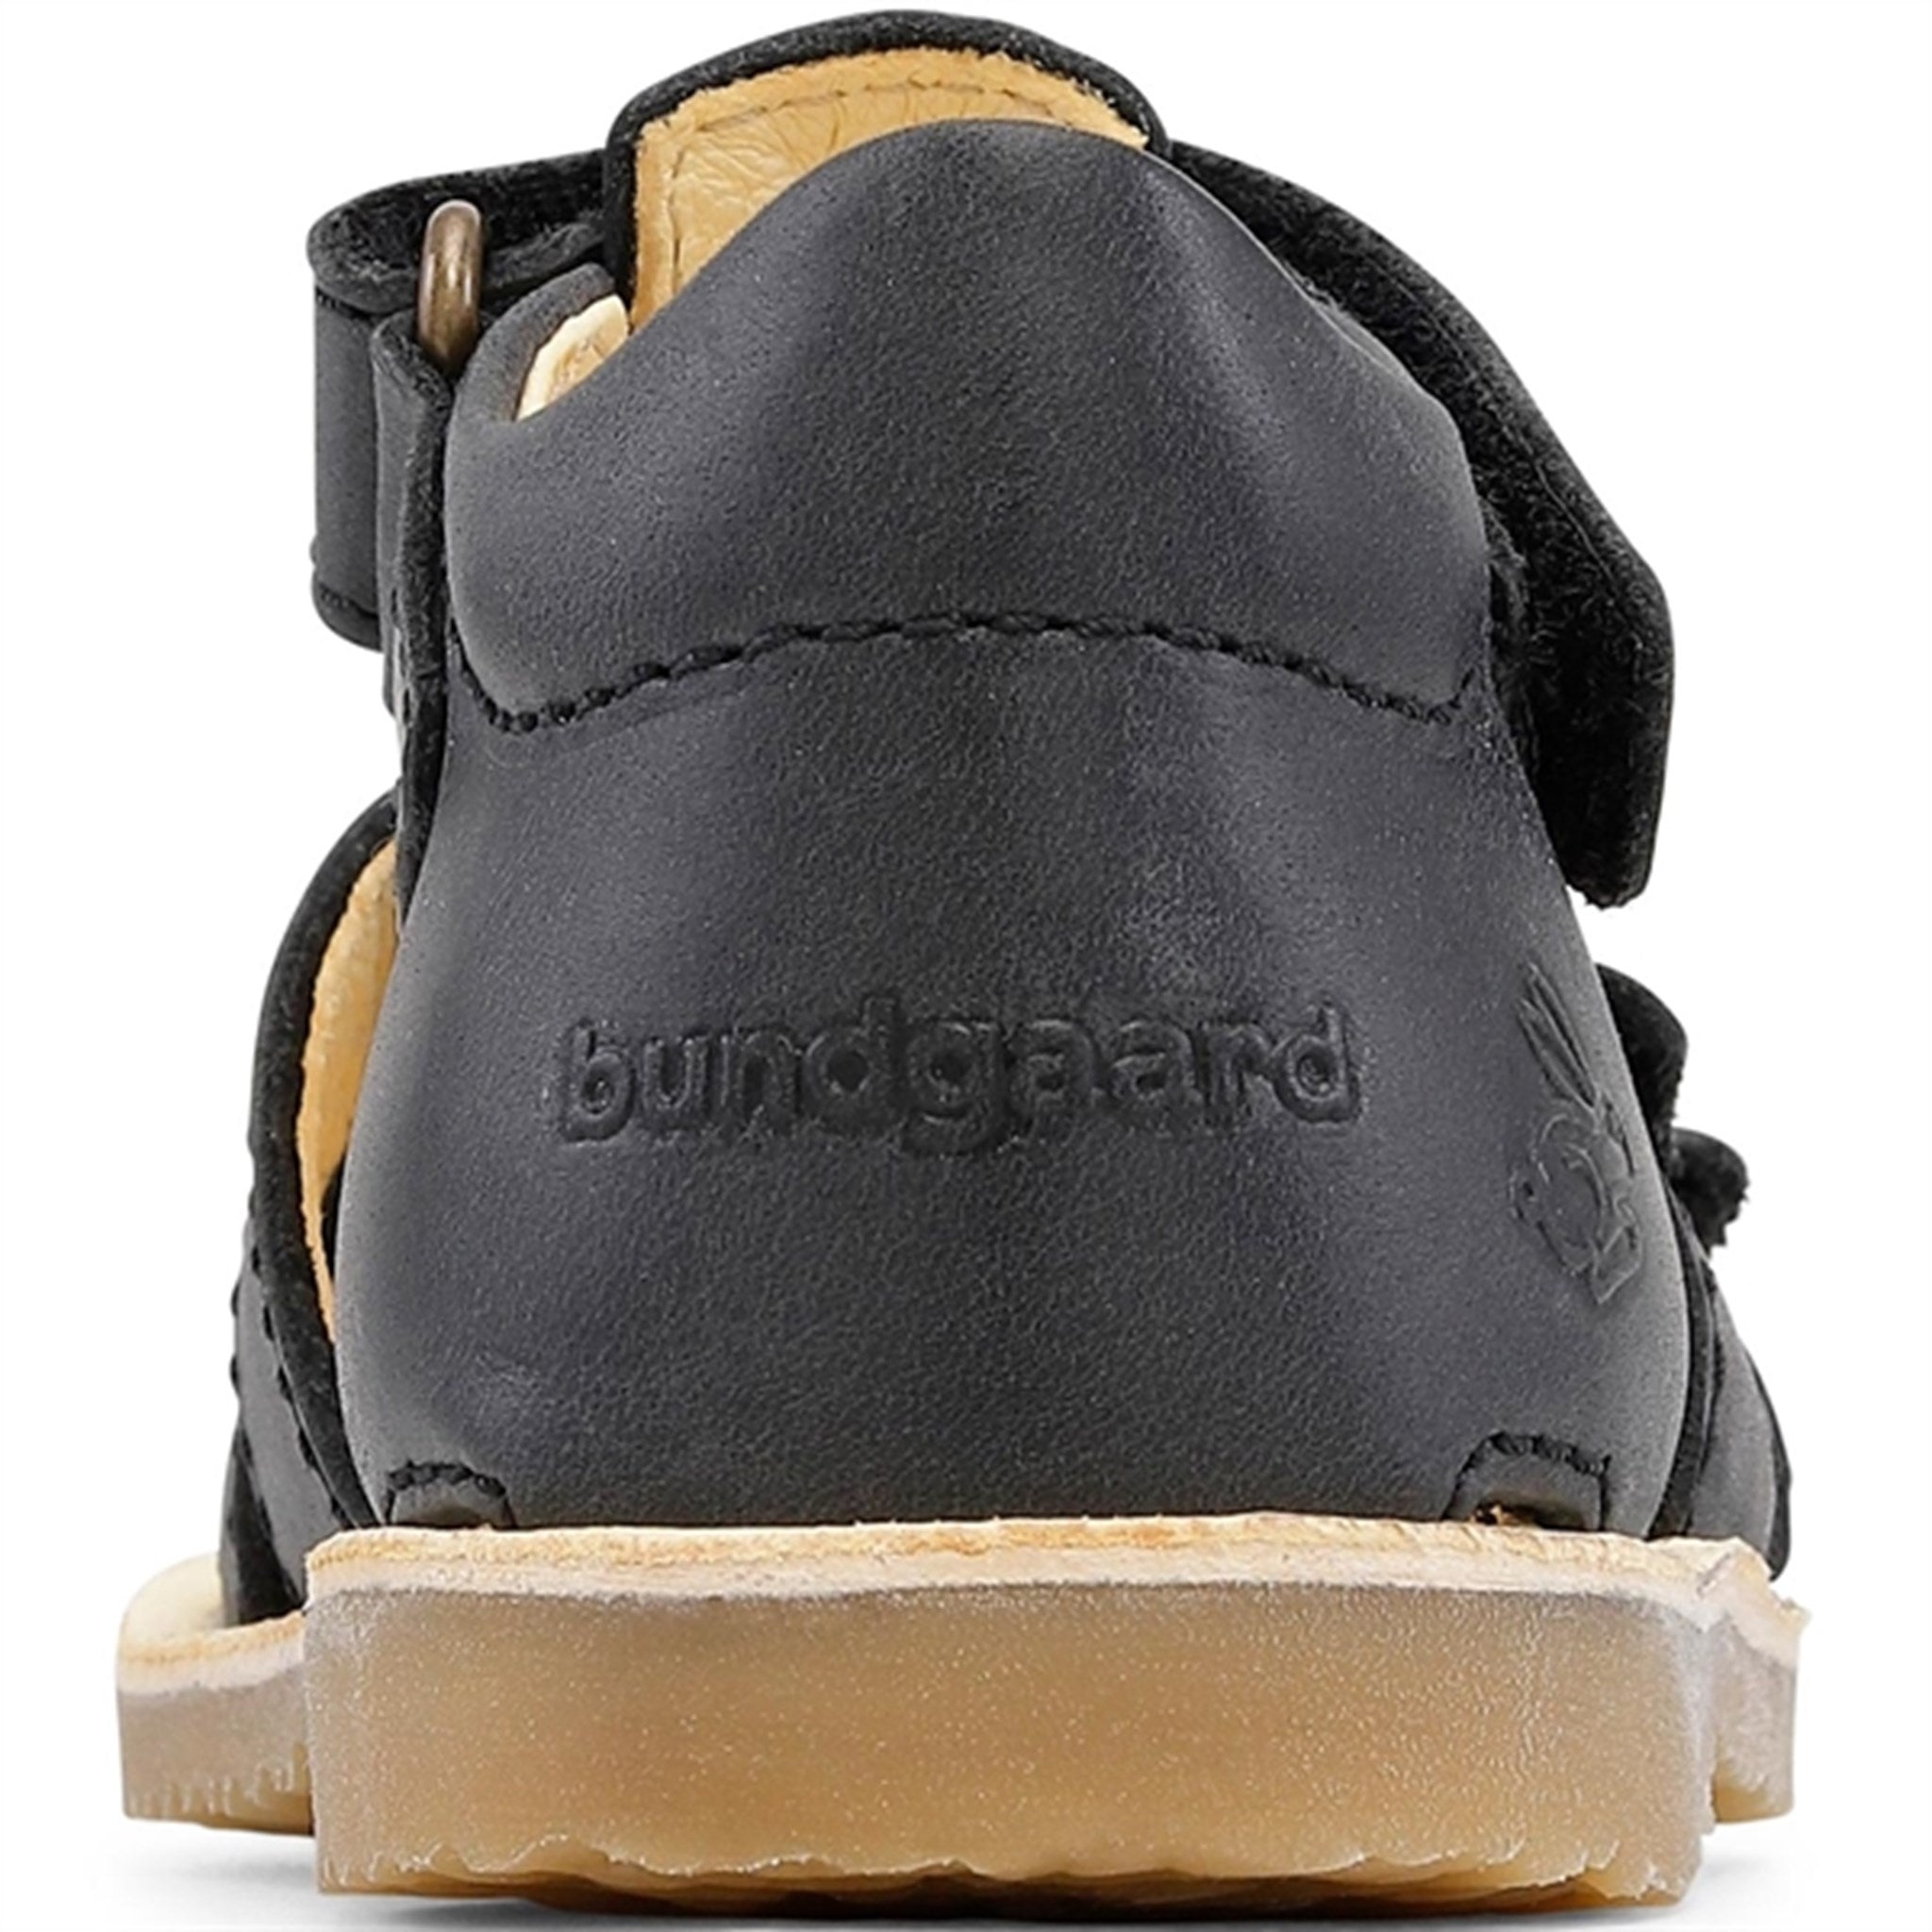 Bundgaard Sandal Shea Black 5